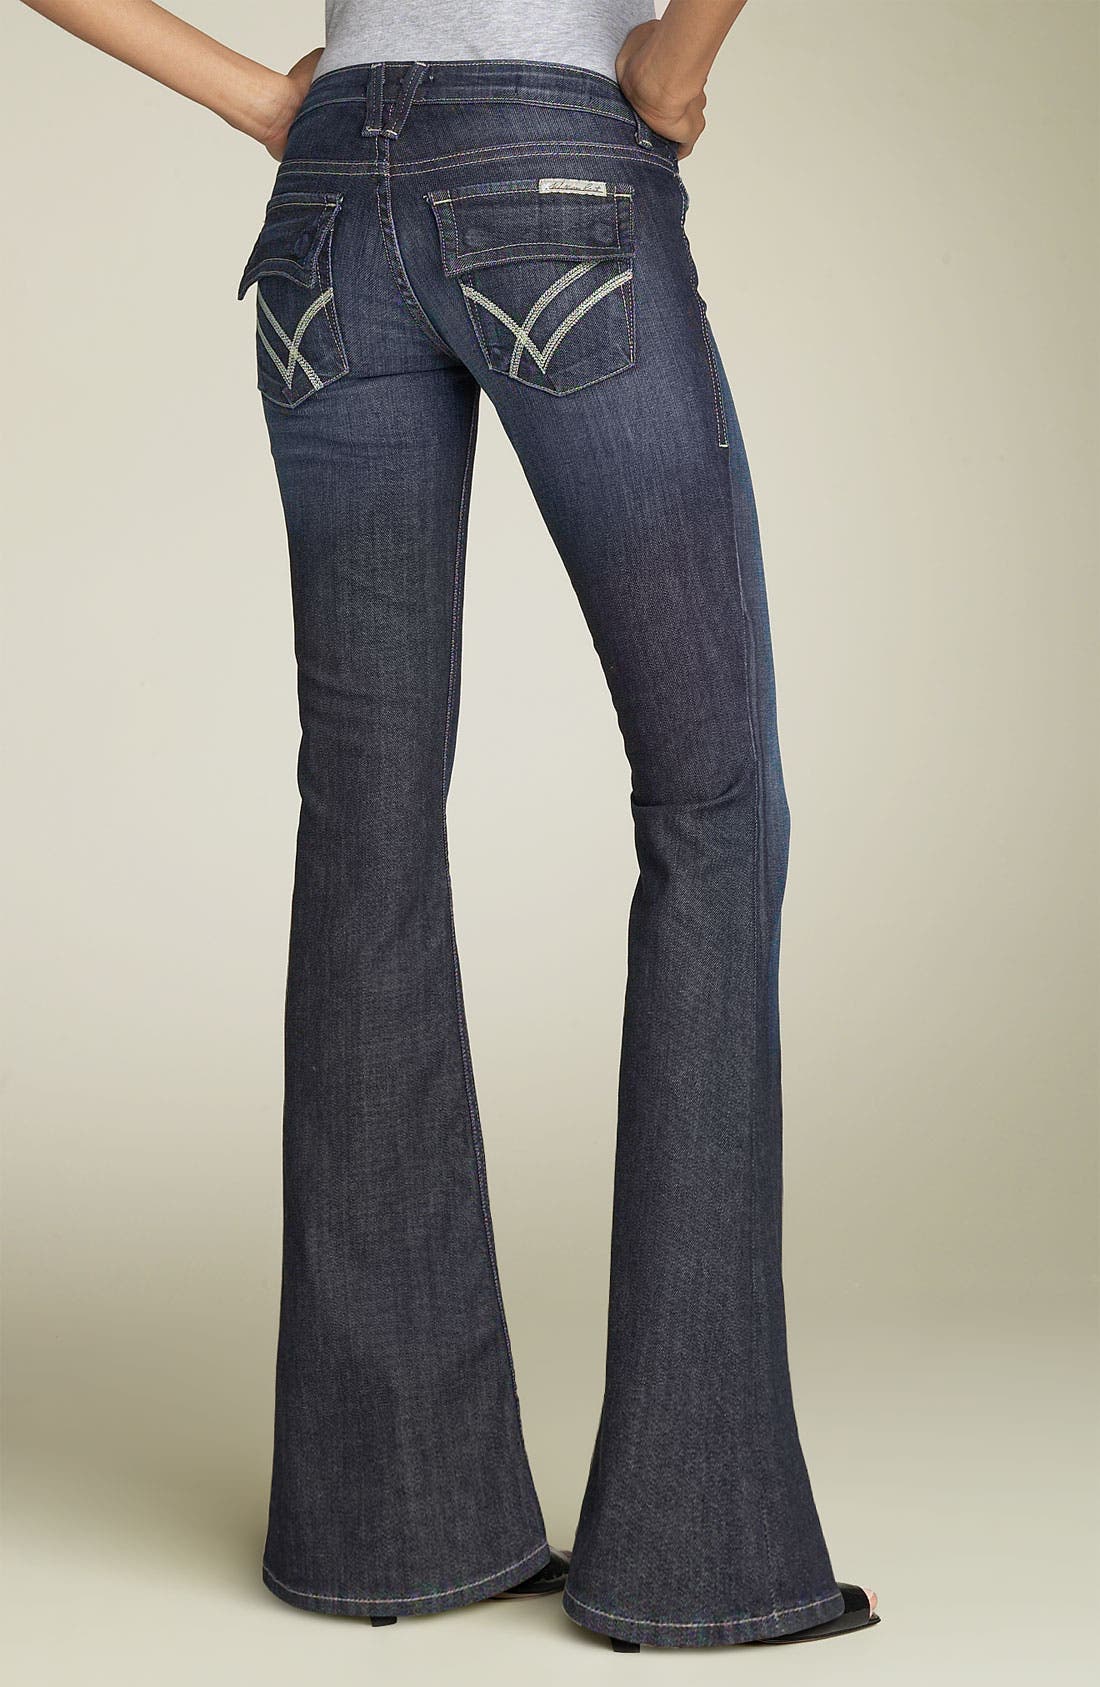 levi wrangler jeans